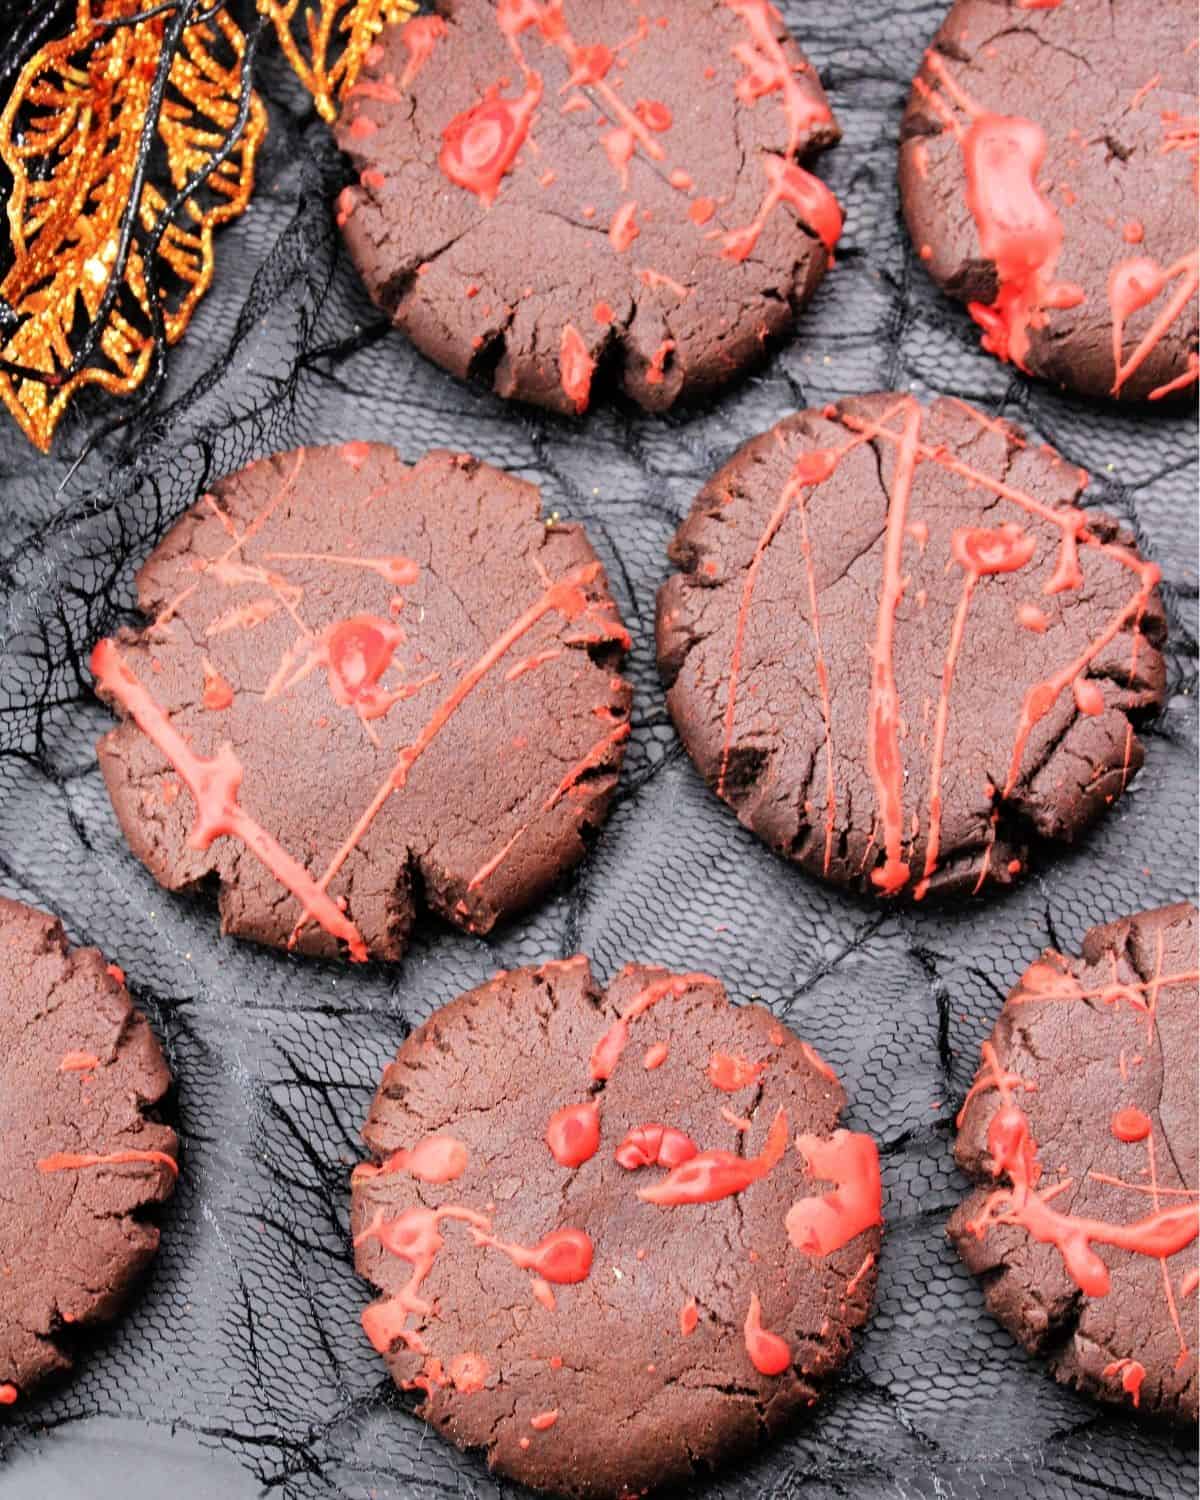 Blood splatter cookies on a black mesh sheet.